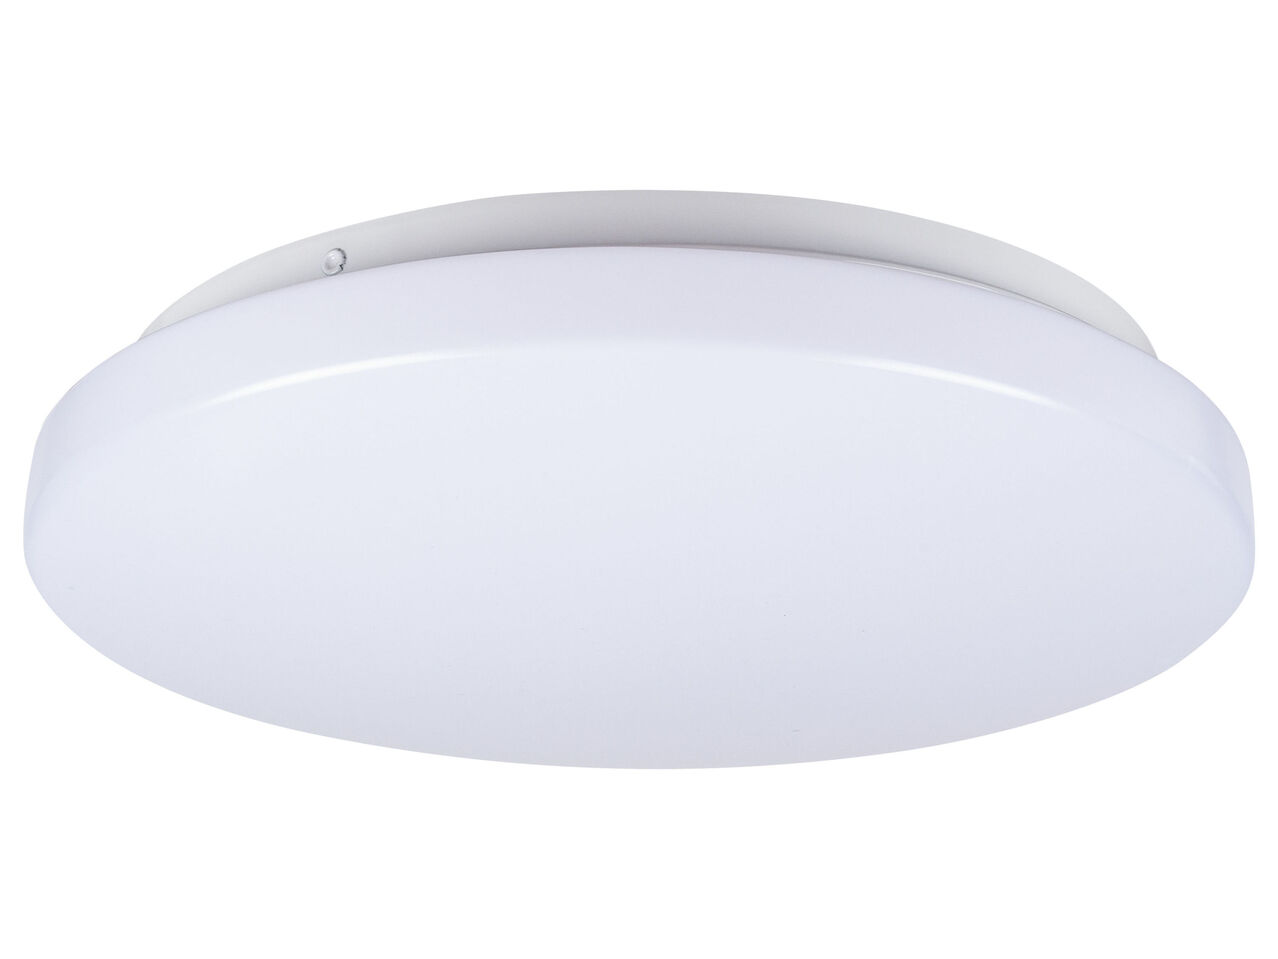 LIVARNO HOME® Lampa LED , cena 49,99 PLN 
LIVARNO HOME® Lampa LED 3 wzory 
- ...